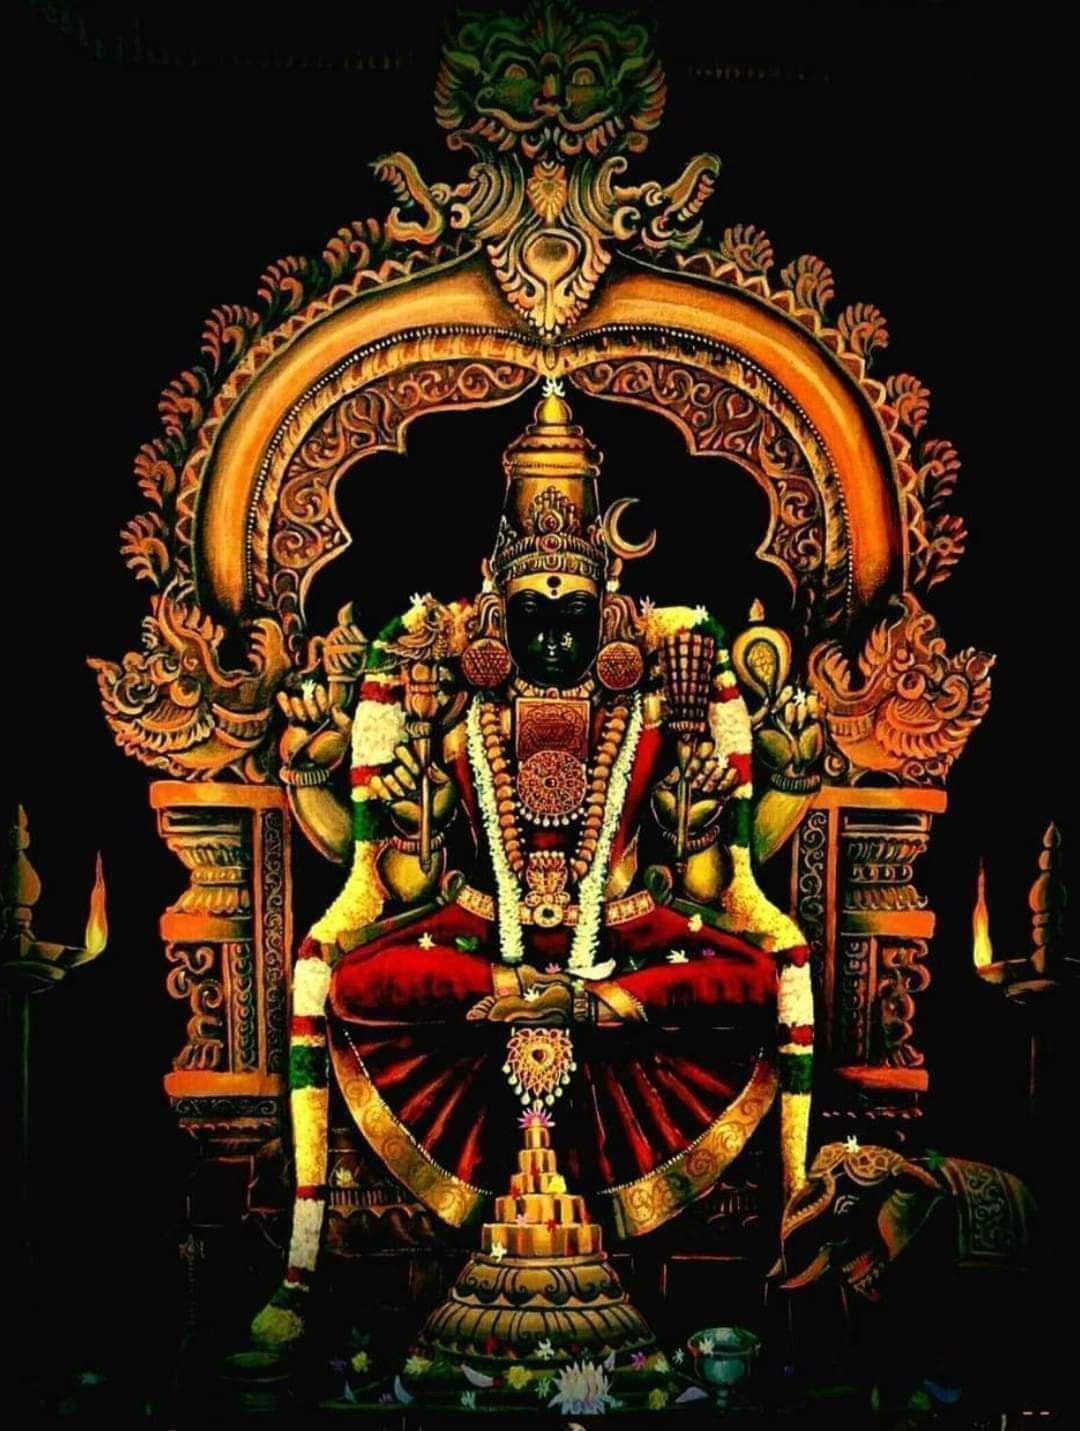 Sri Lalitha Devi